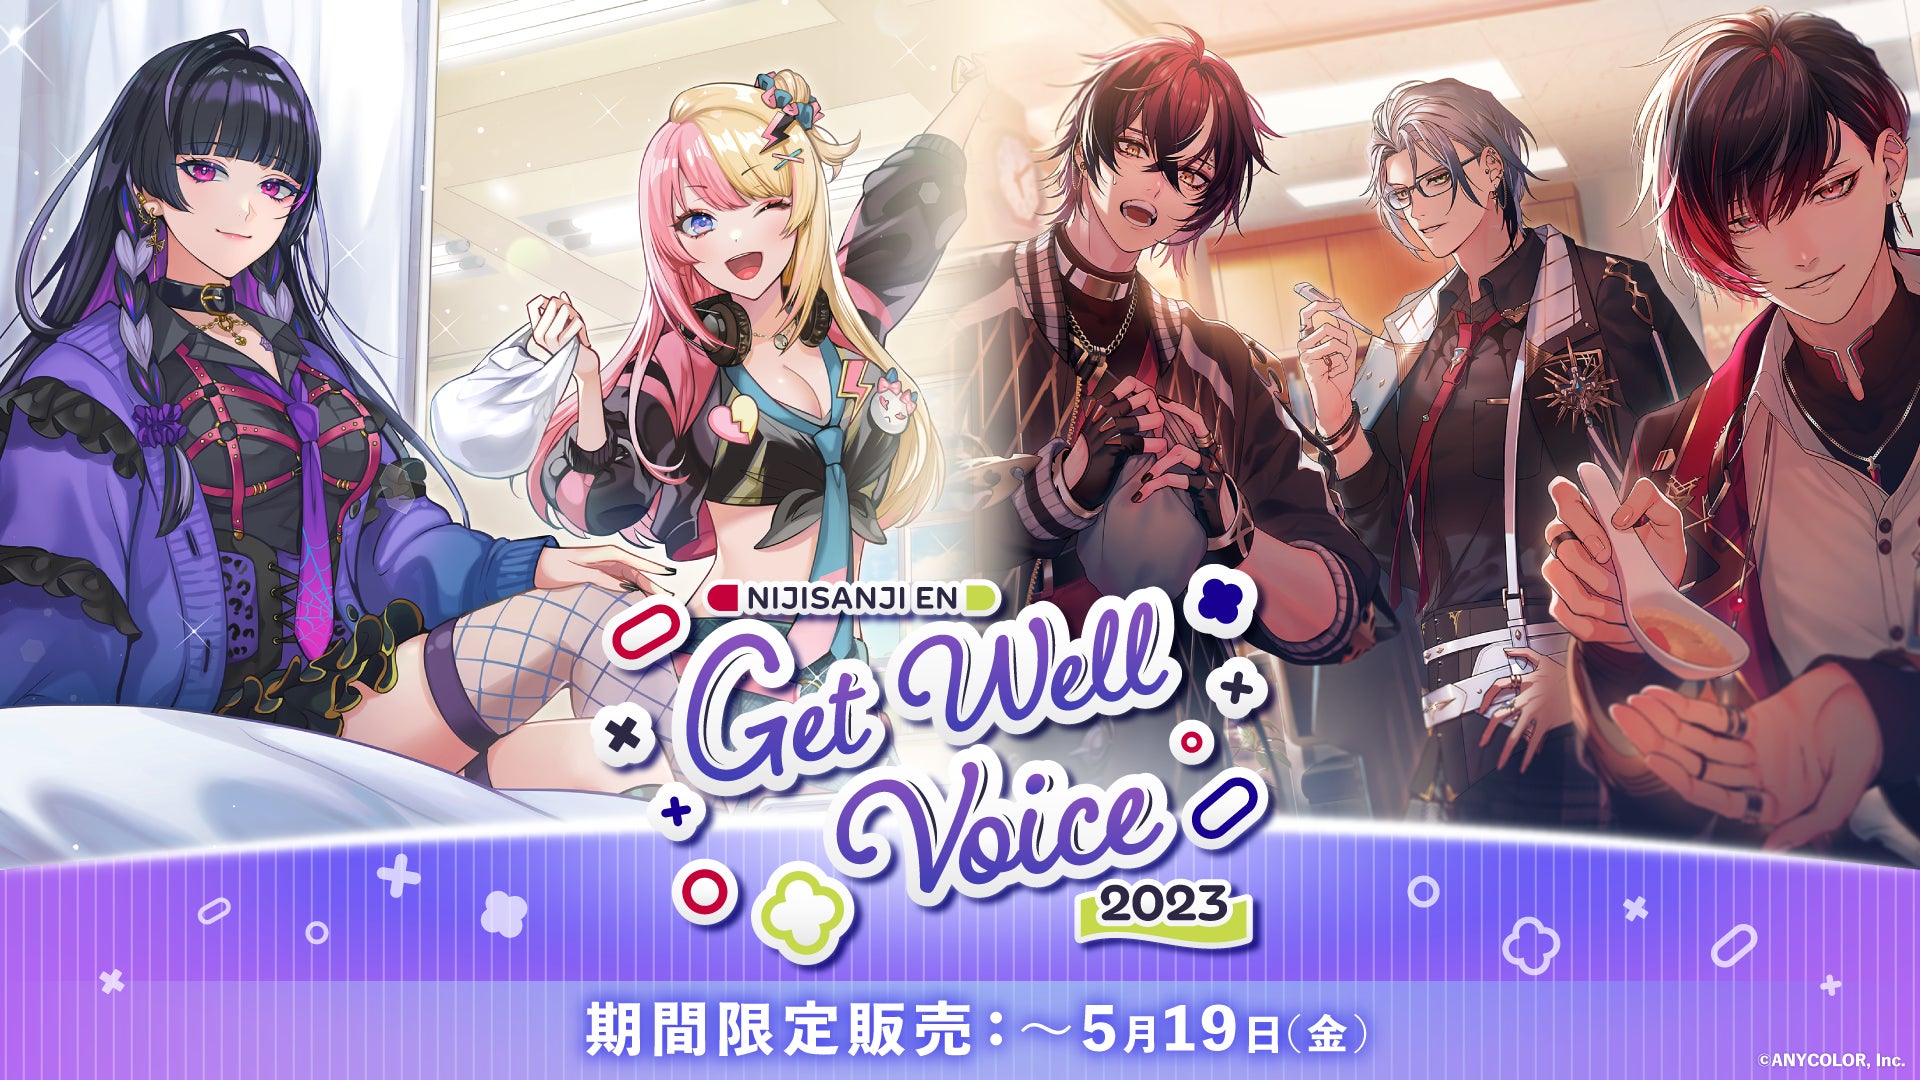 NIJISANJI EN「Get Well Voice 2023」が2023年4月24日(月)11時(JST)からにじストア・ENストアにて同時販売開始！